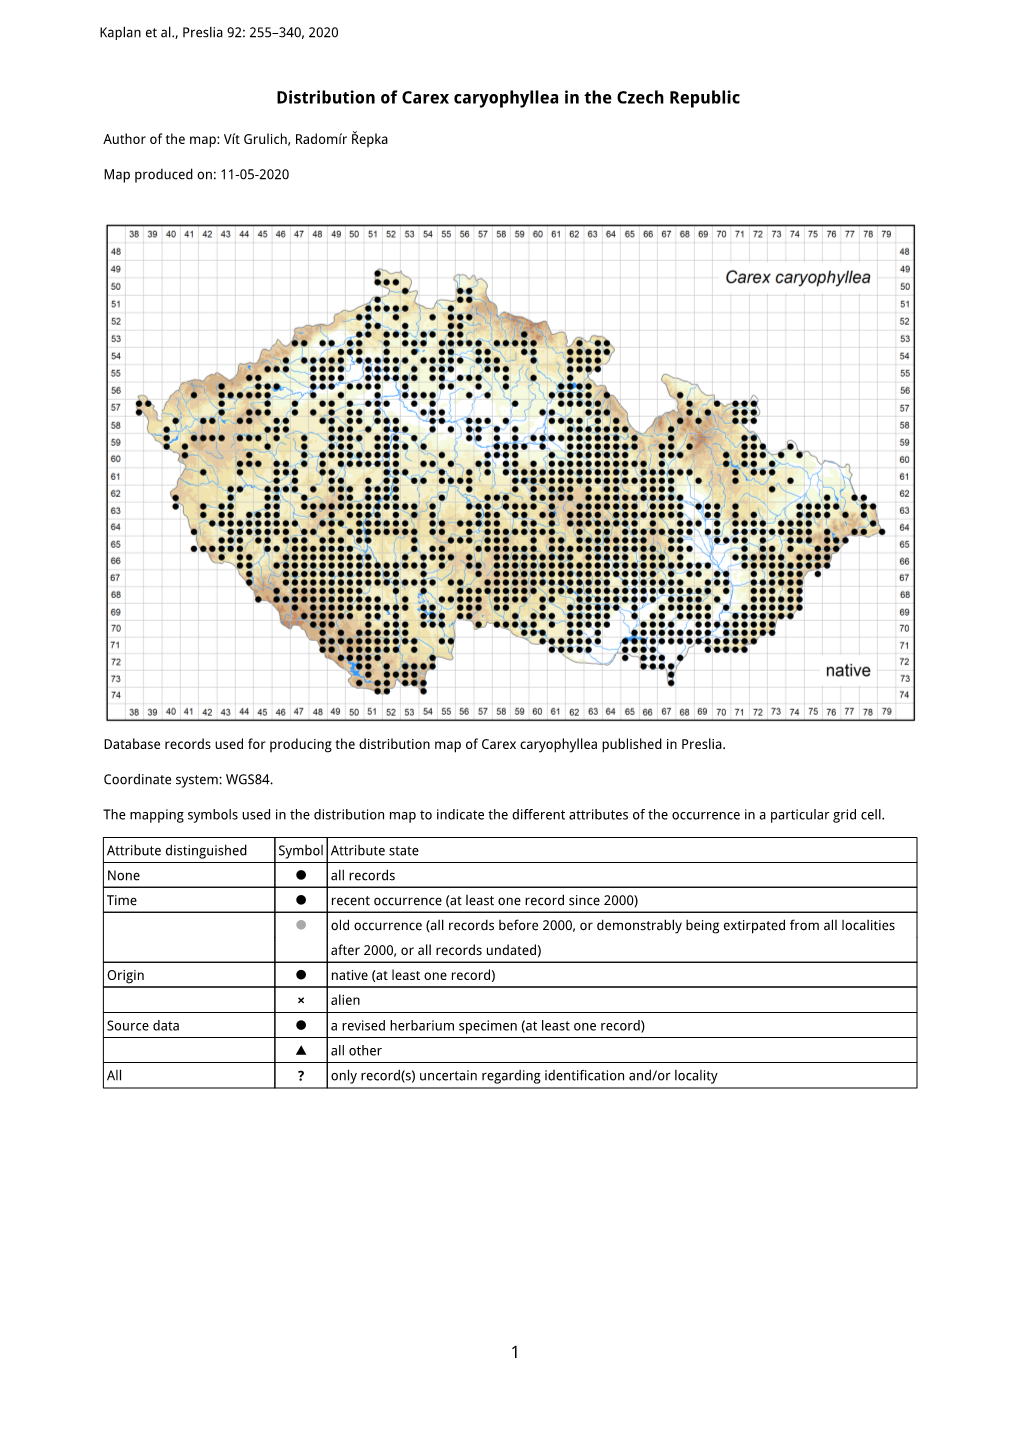 1 Distribution of Carex Caryophyllea in the Czech Republic